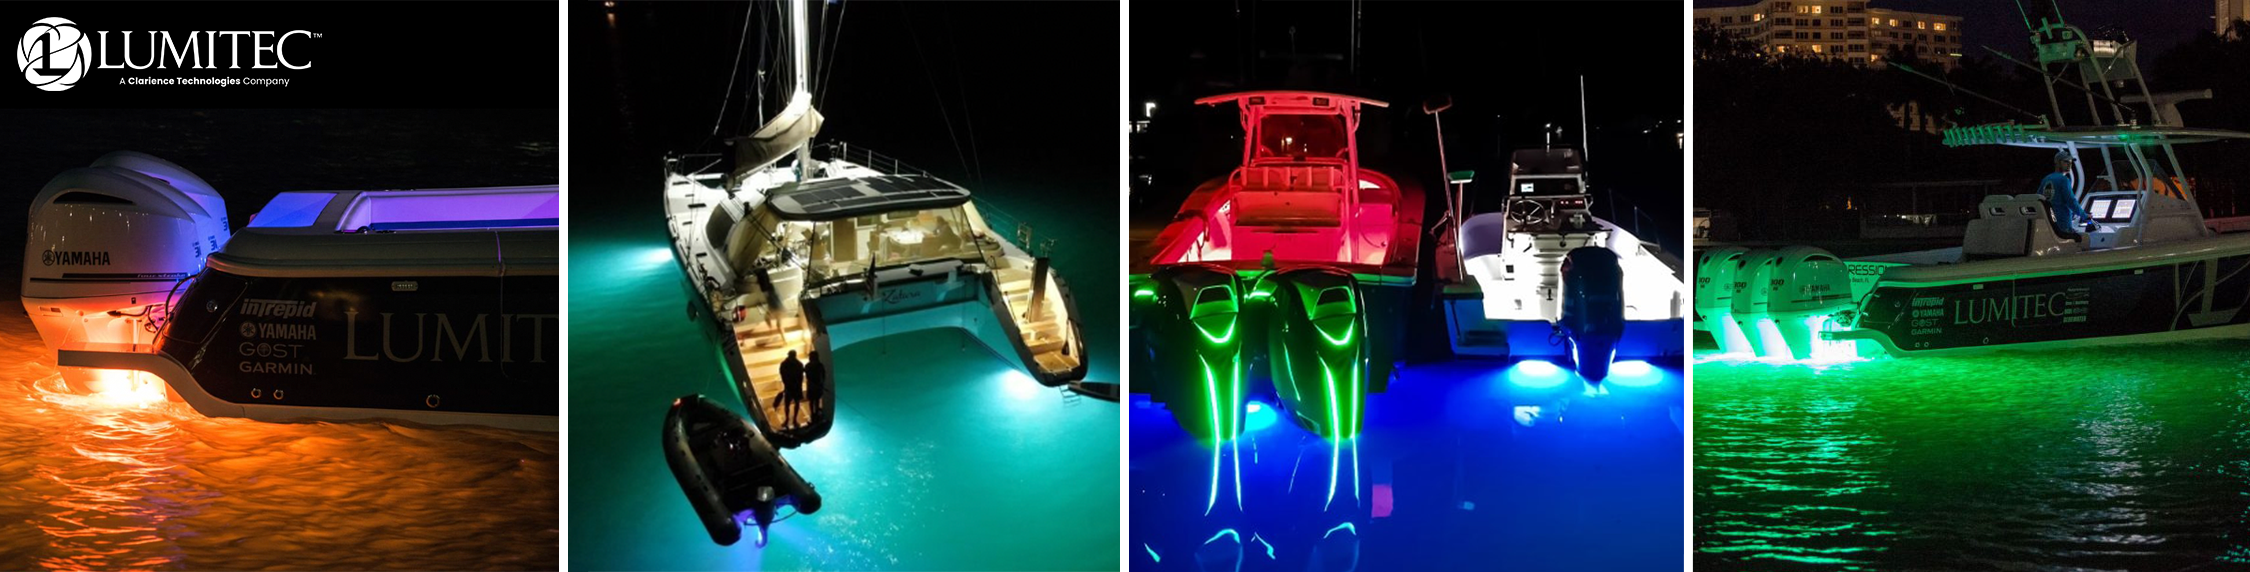 LUMITEC Underwater Lights | Underwater Lighting | FREE US SHIPPING